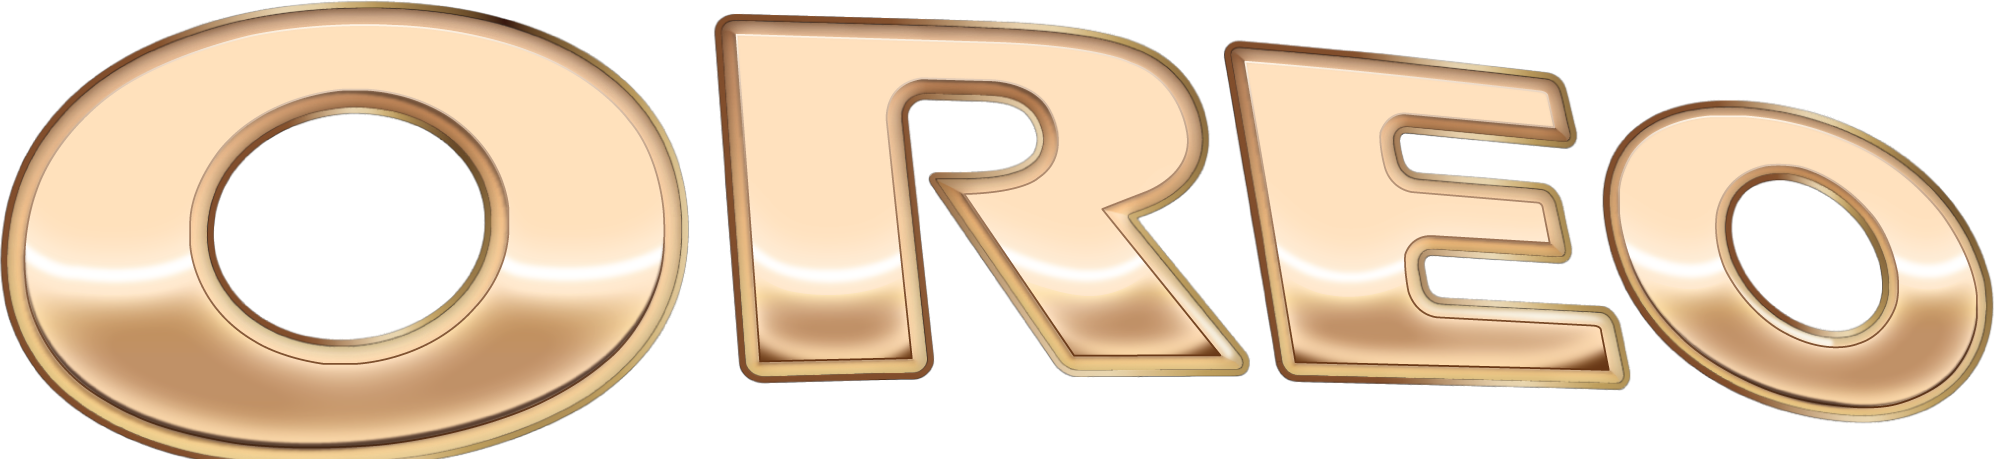 Oreo Star Wars Logo